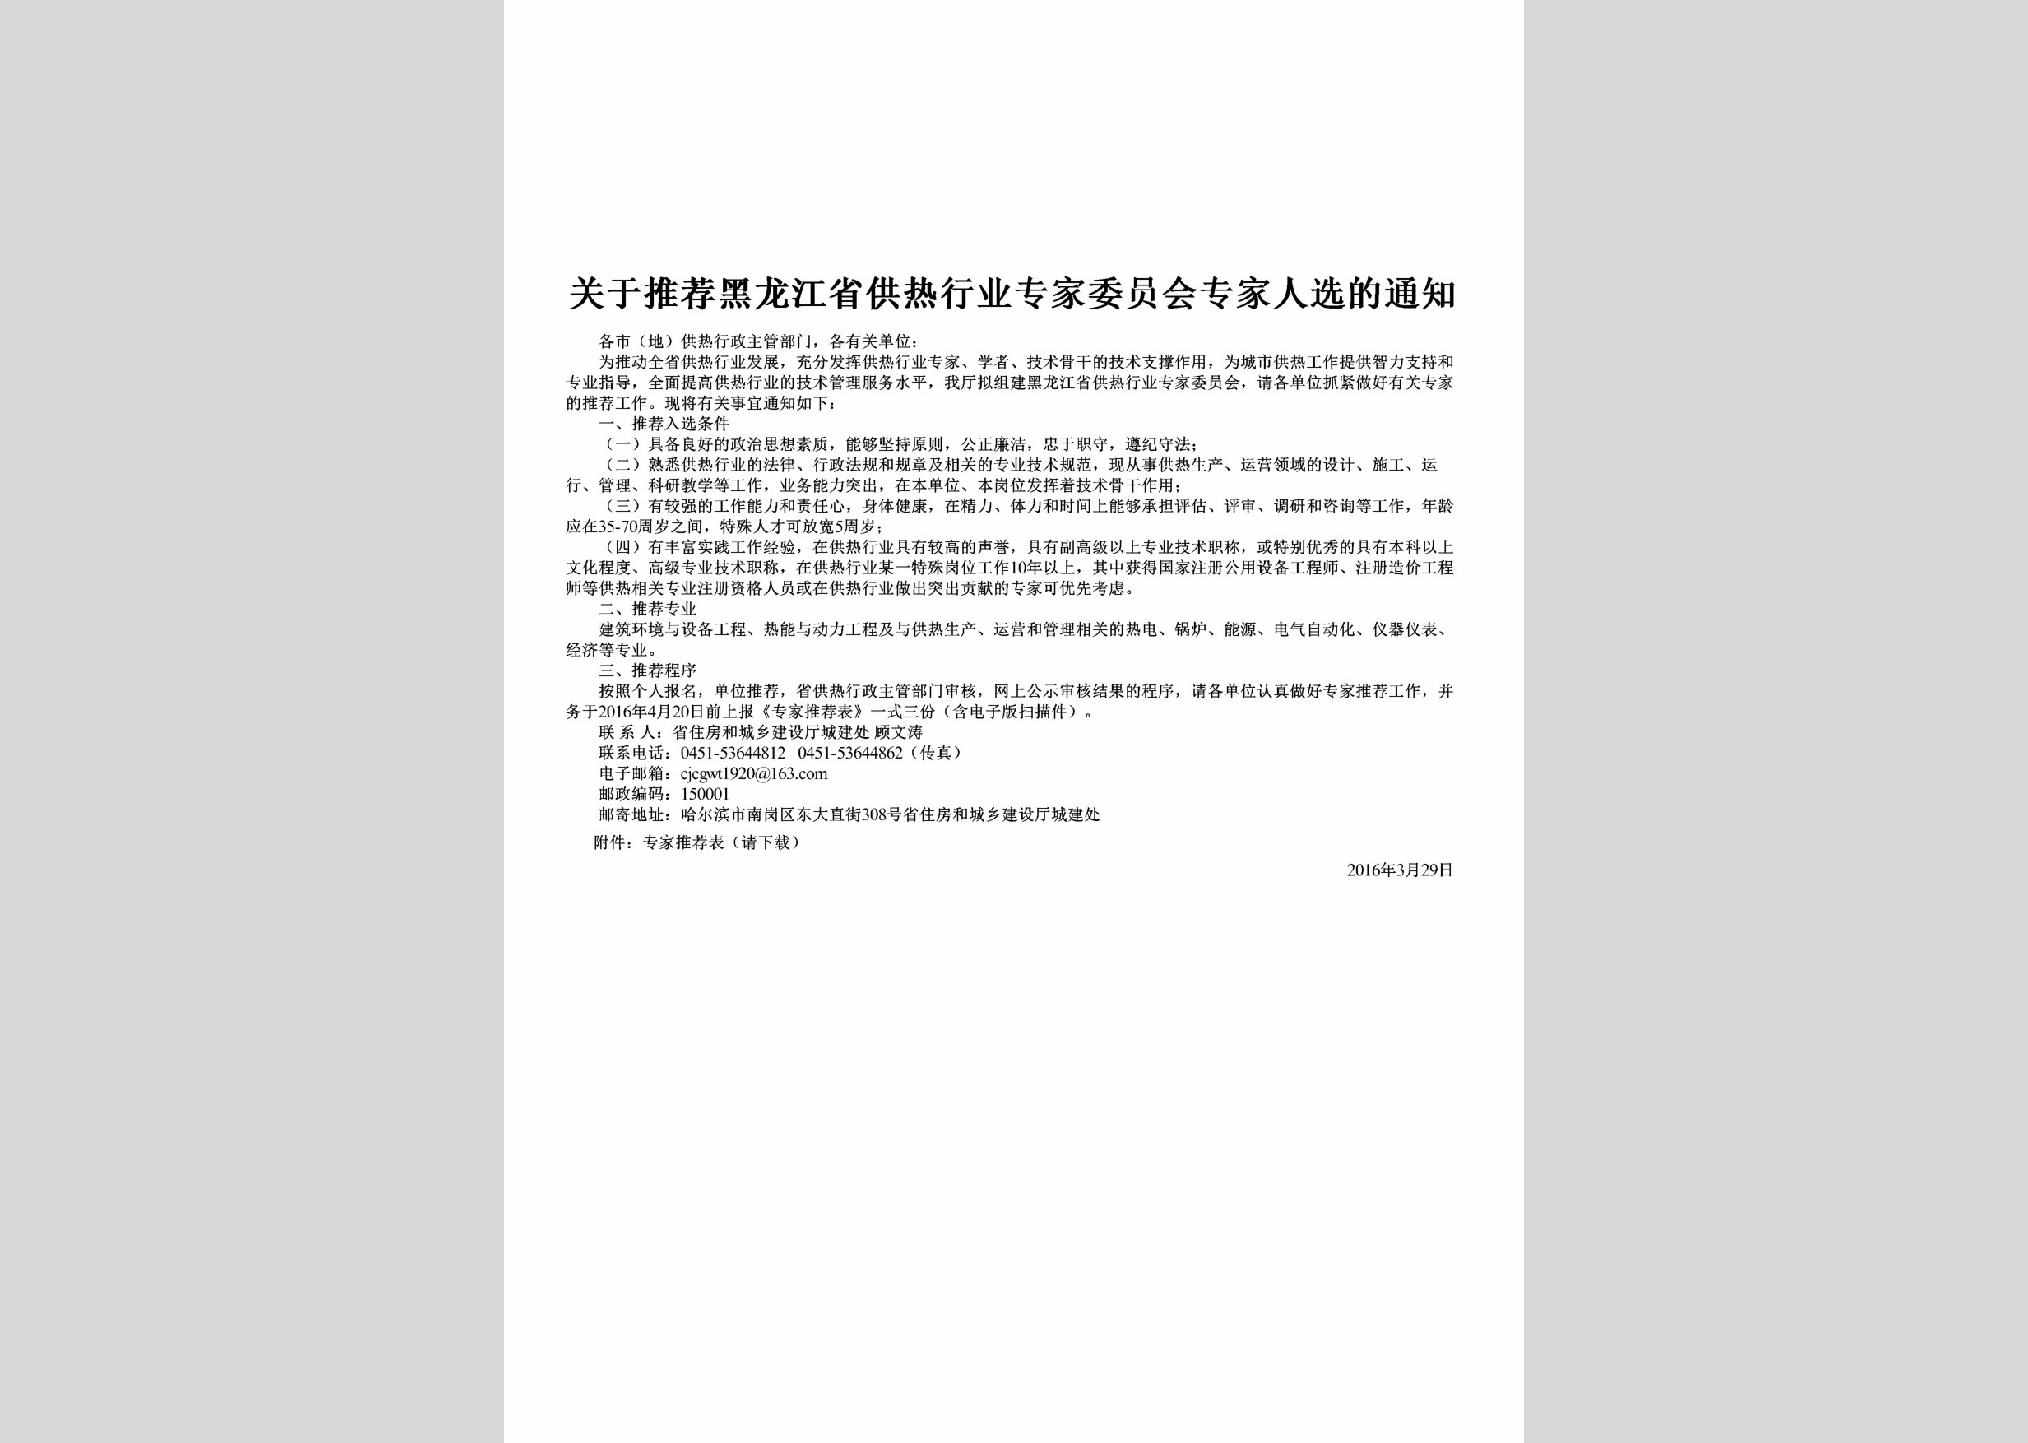 HLJ-TJGRXYTZ-2013：关于推荐黑龙江省供热行业专家委员会专家人选的通知